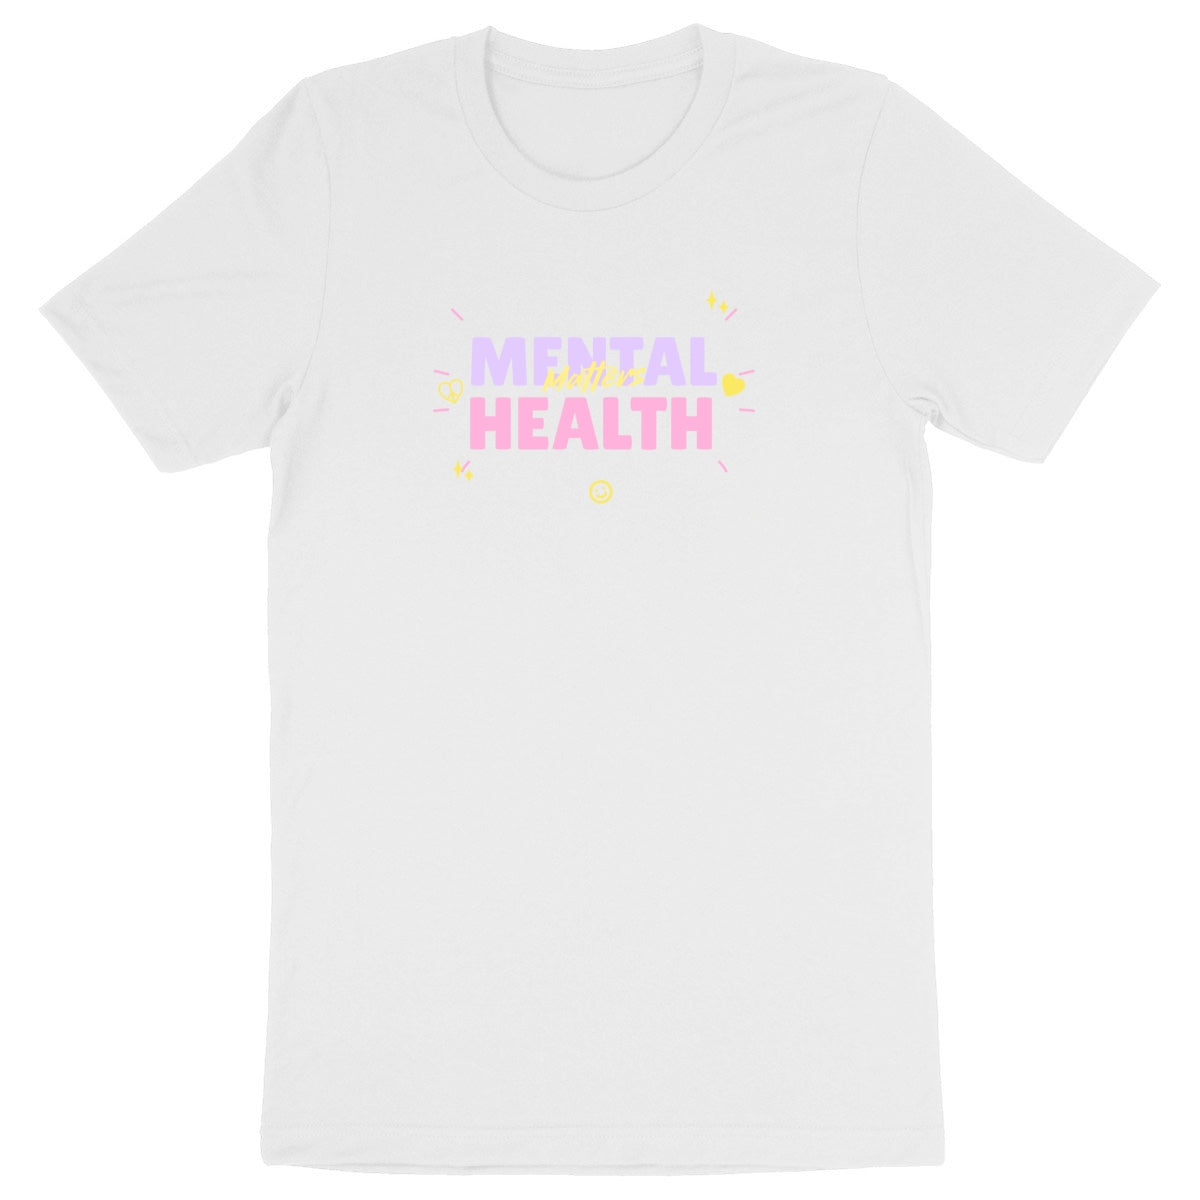 Mental Health Matters - Unisex Organic T-shirt